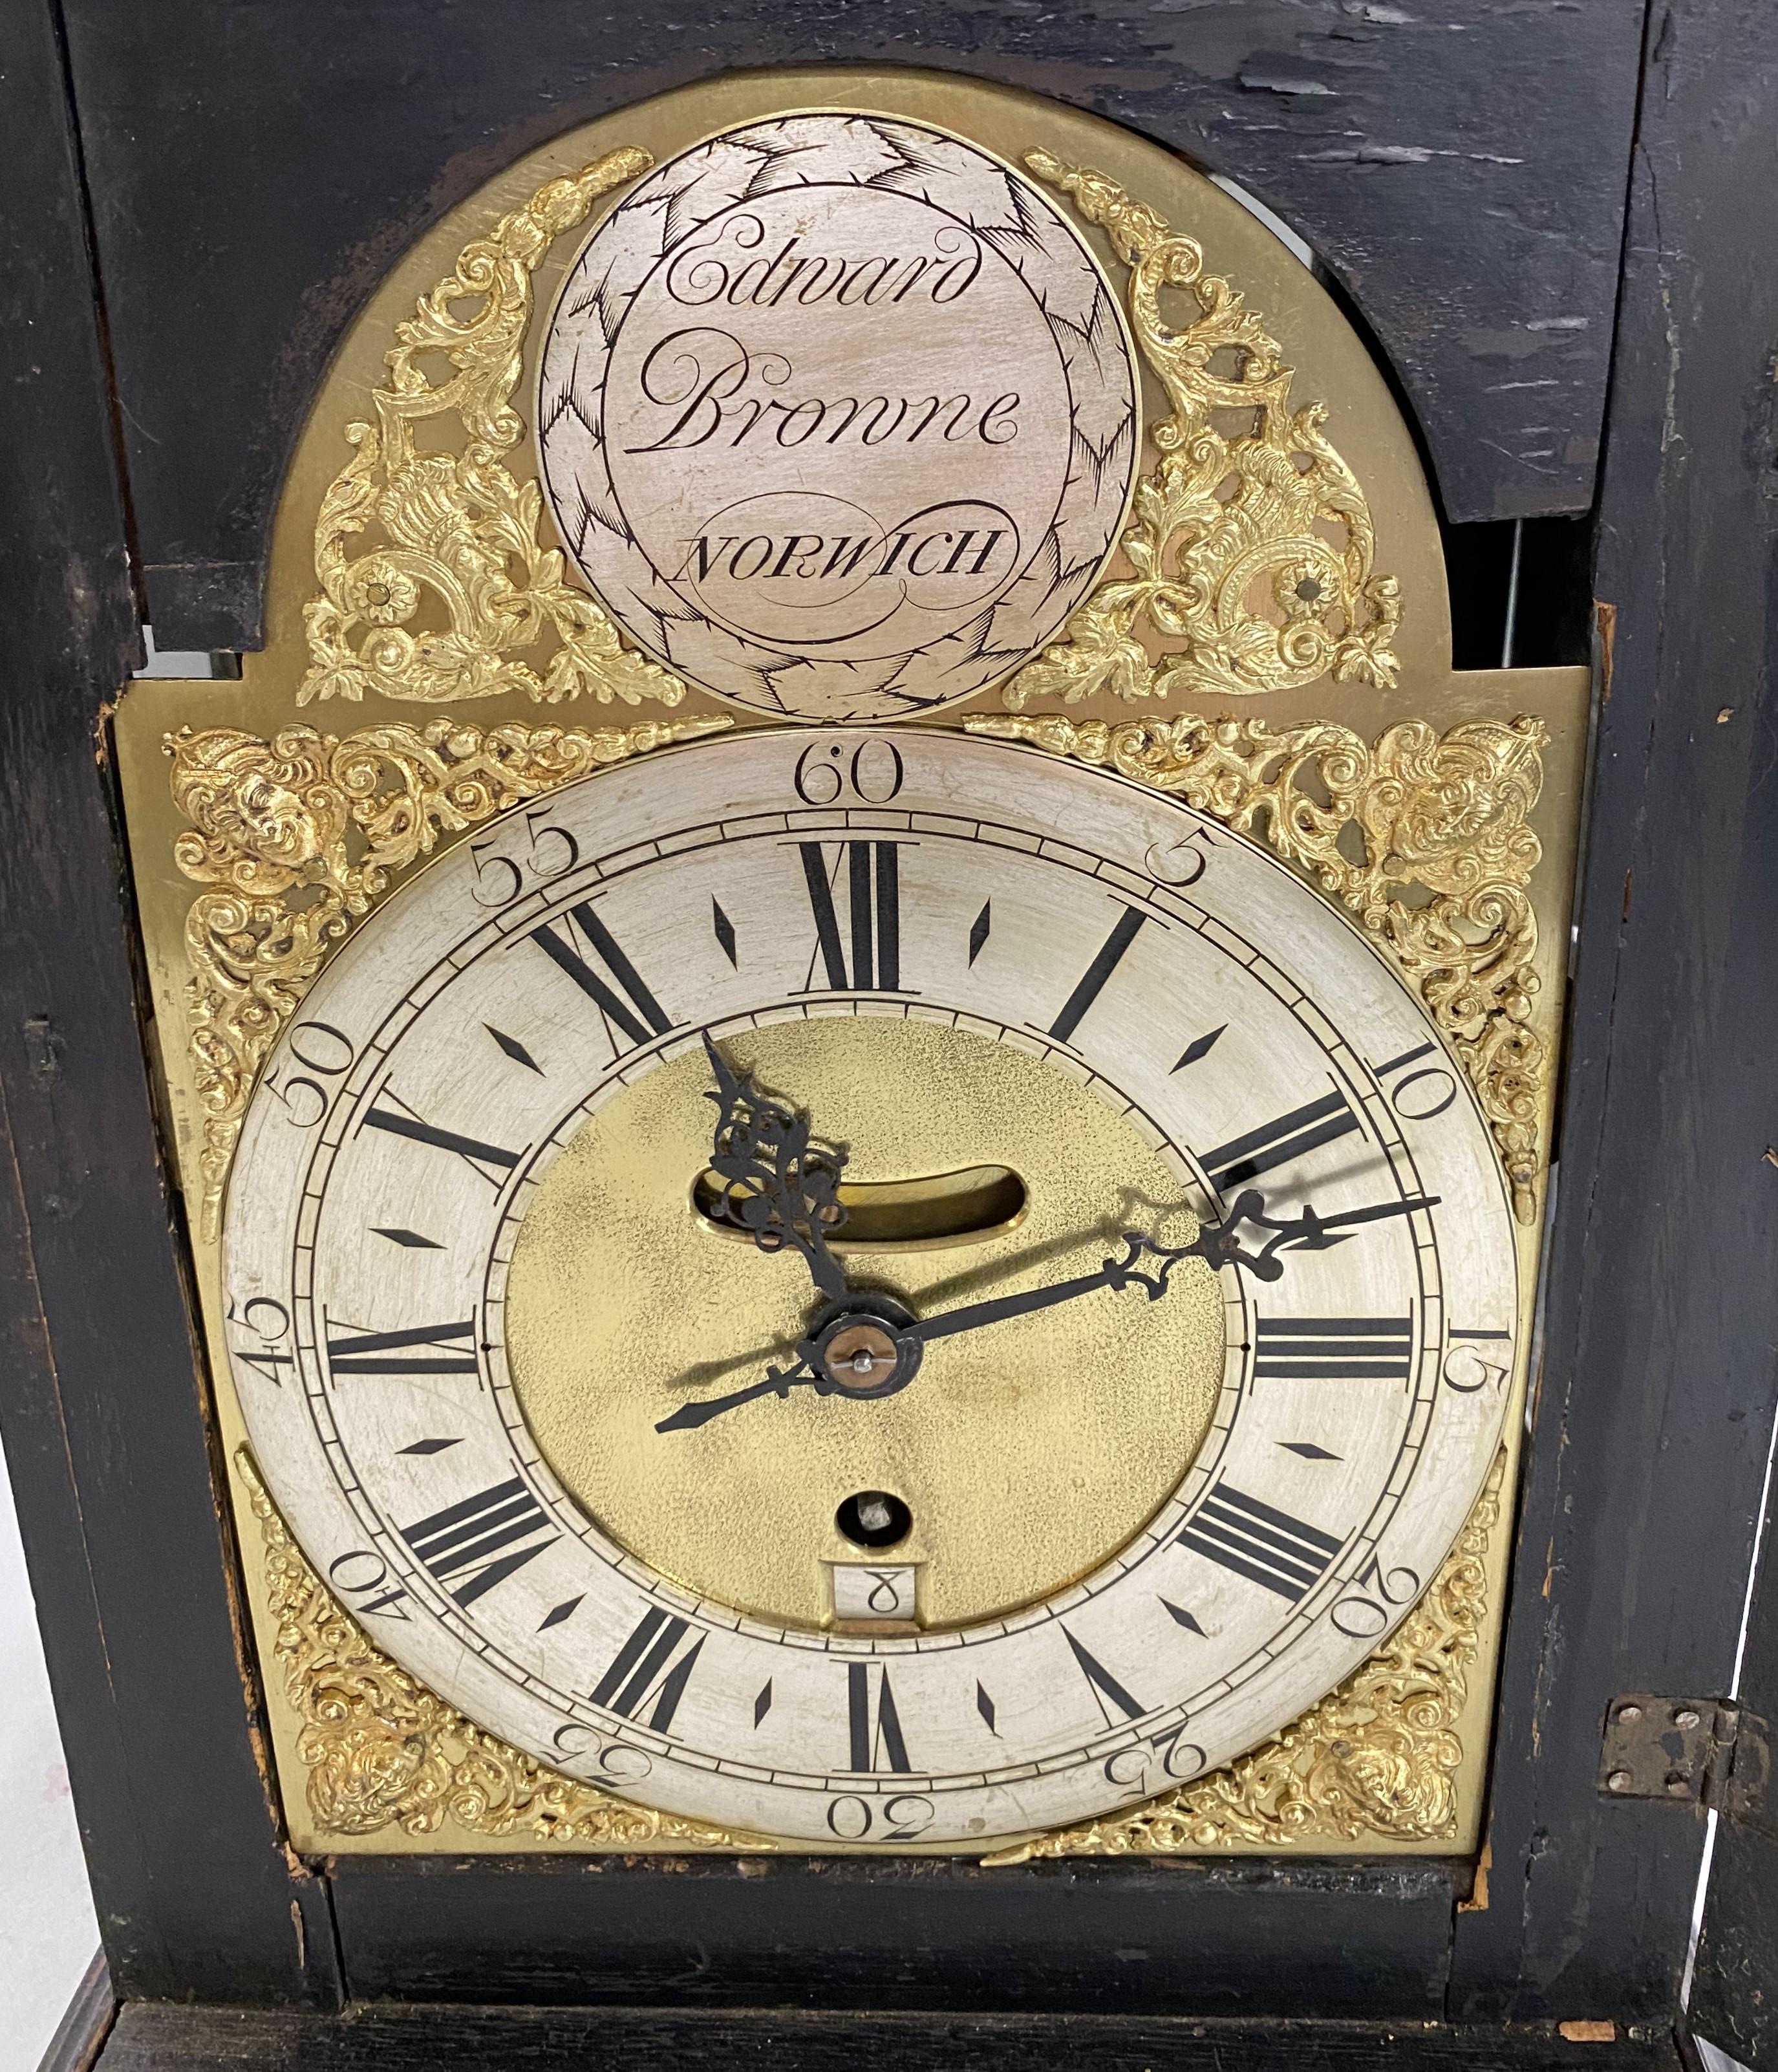 English George II Edward Browne of Norwich Bracket Clock in Ebonized Mahogany Case For Sale